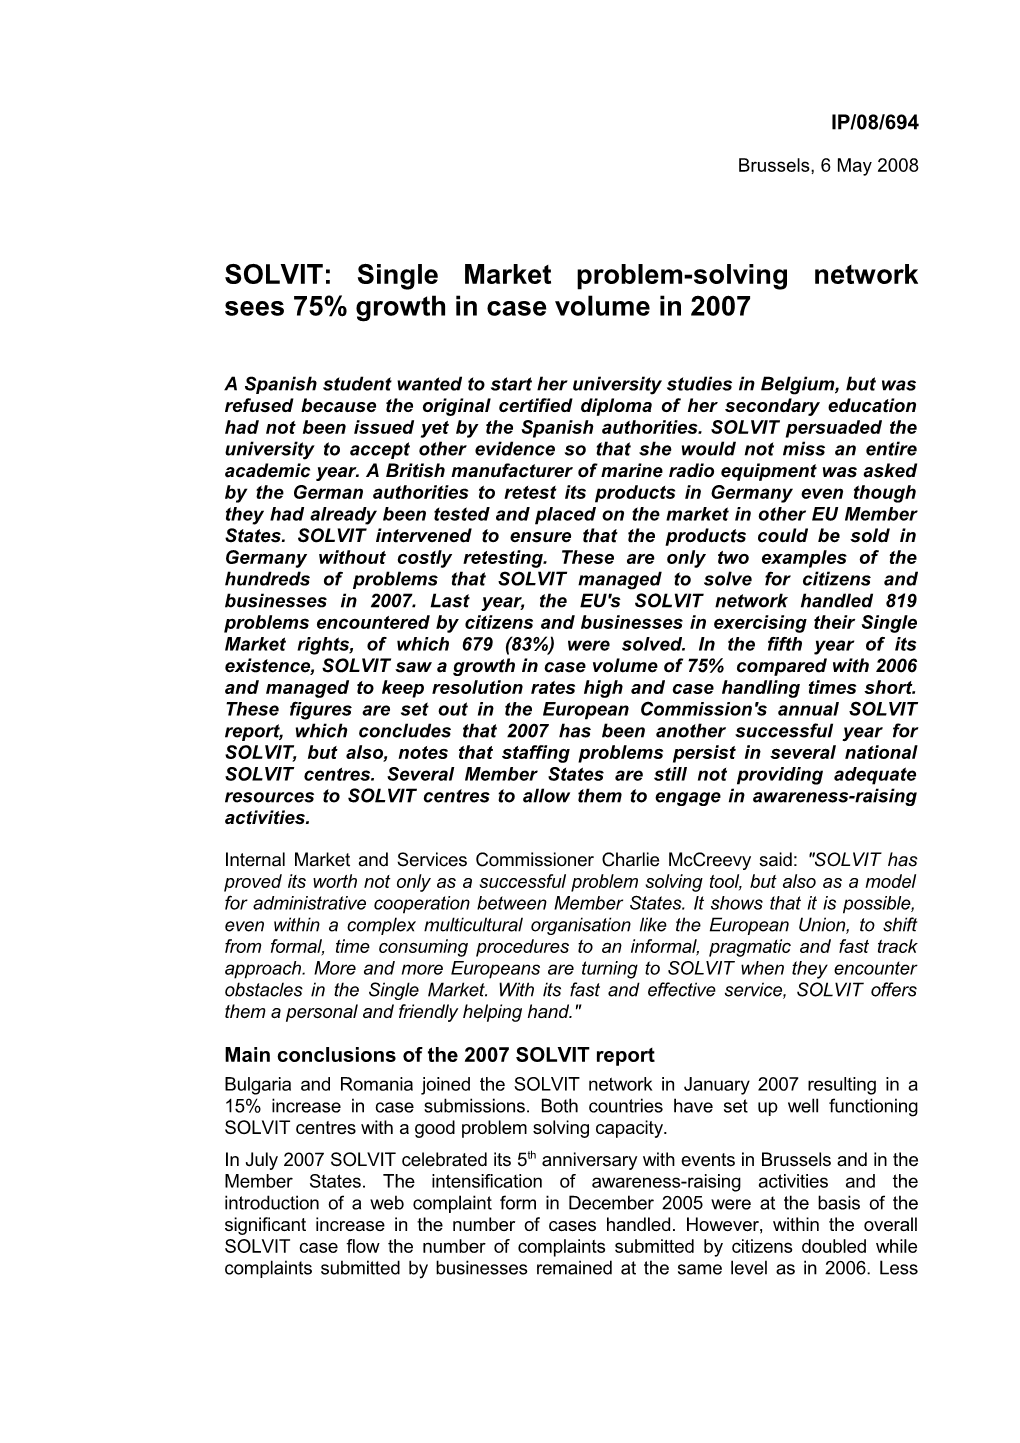 SOLVIT: Single Market Problem-Solving Network Sees 75% Growth in Case Volume in 2007